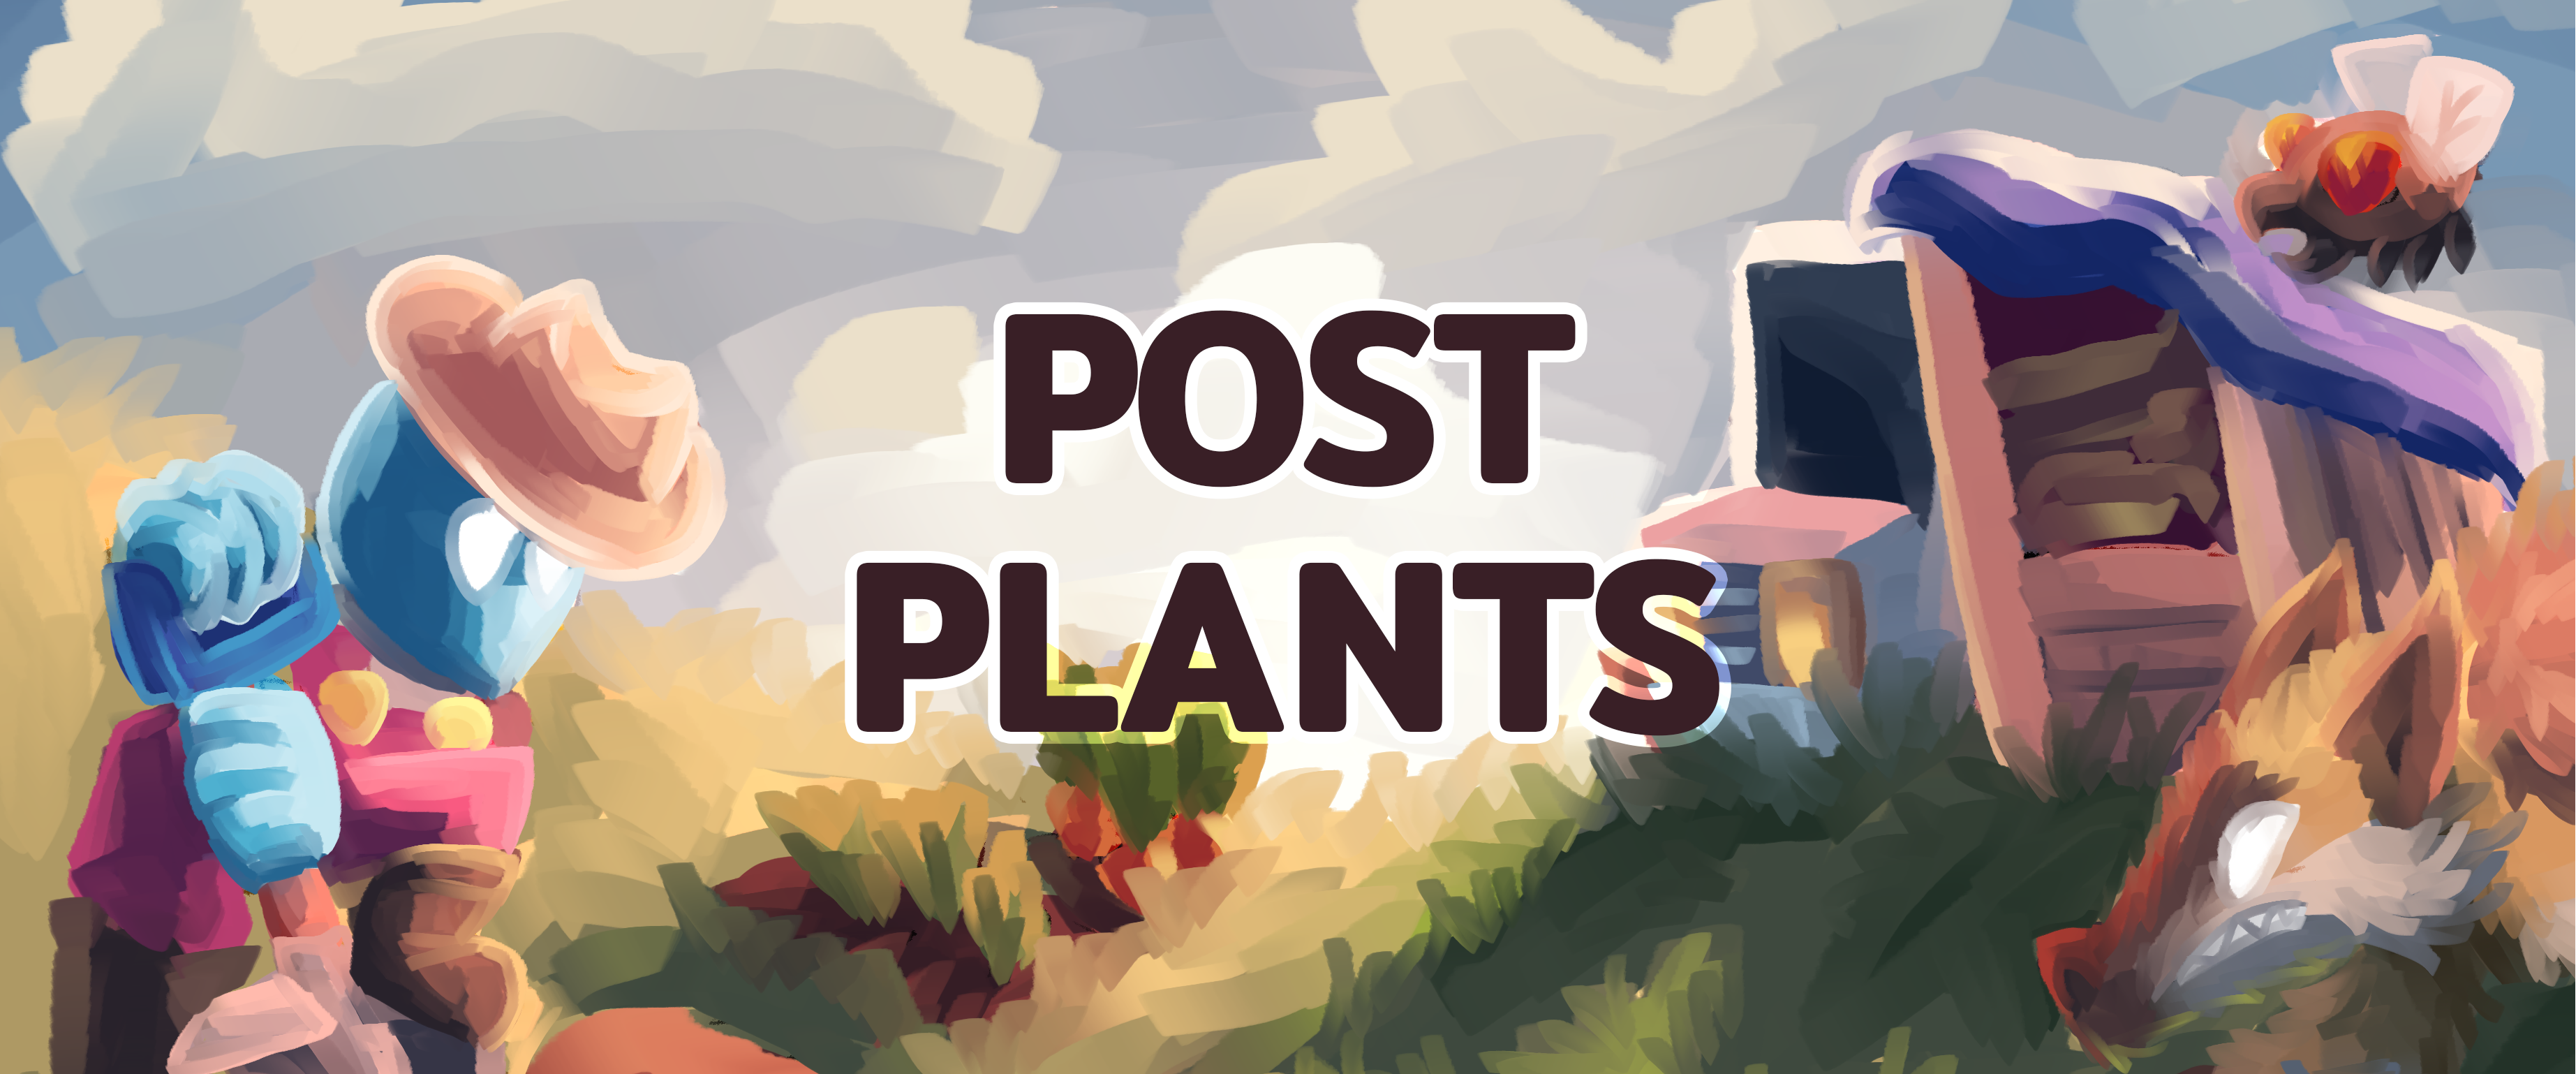 Post Plants